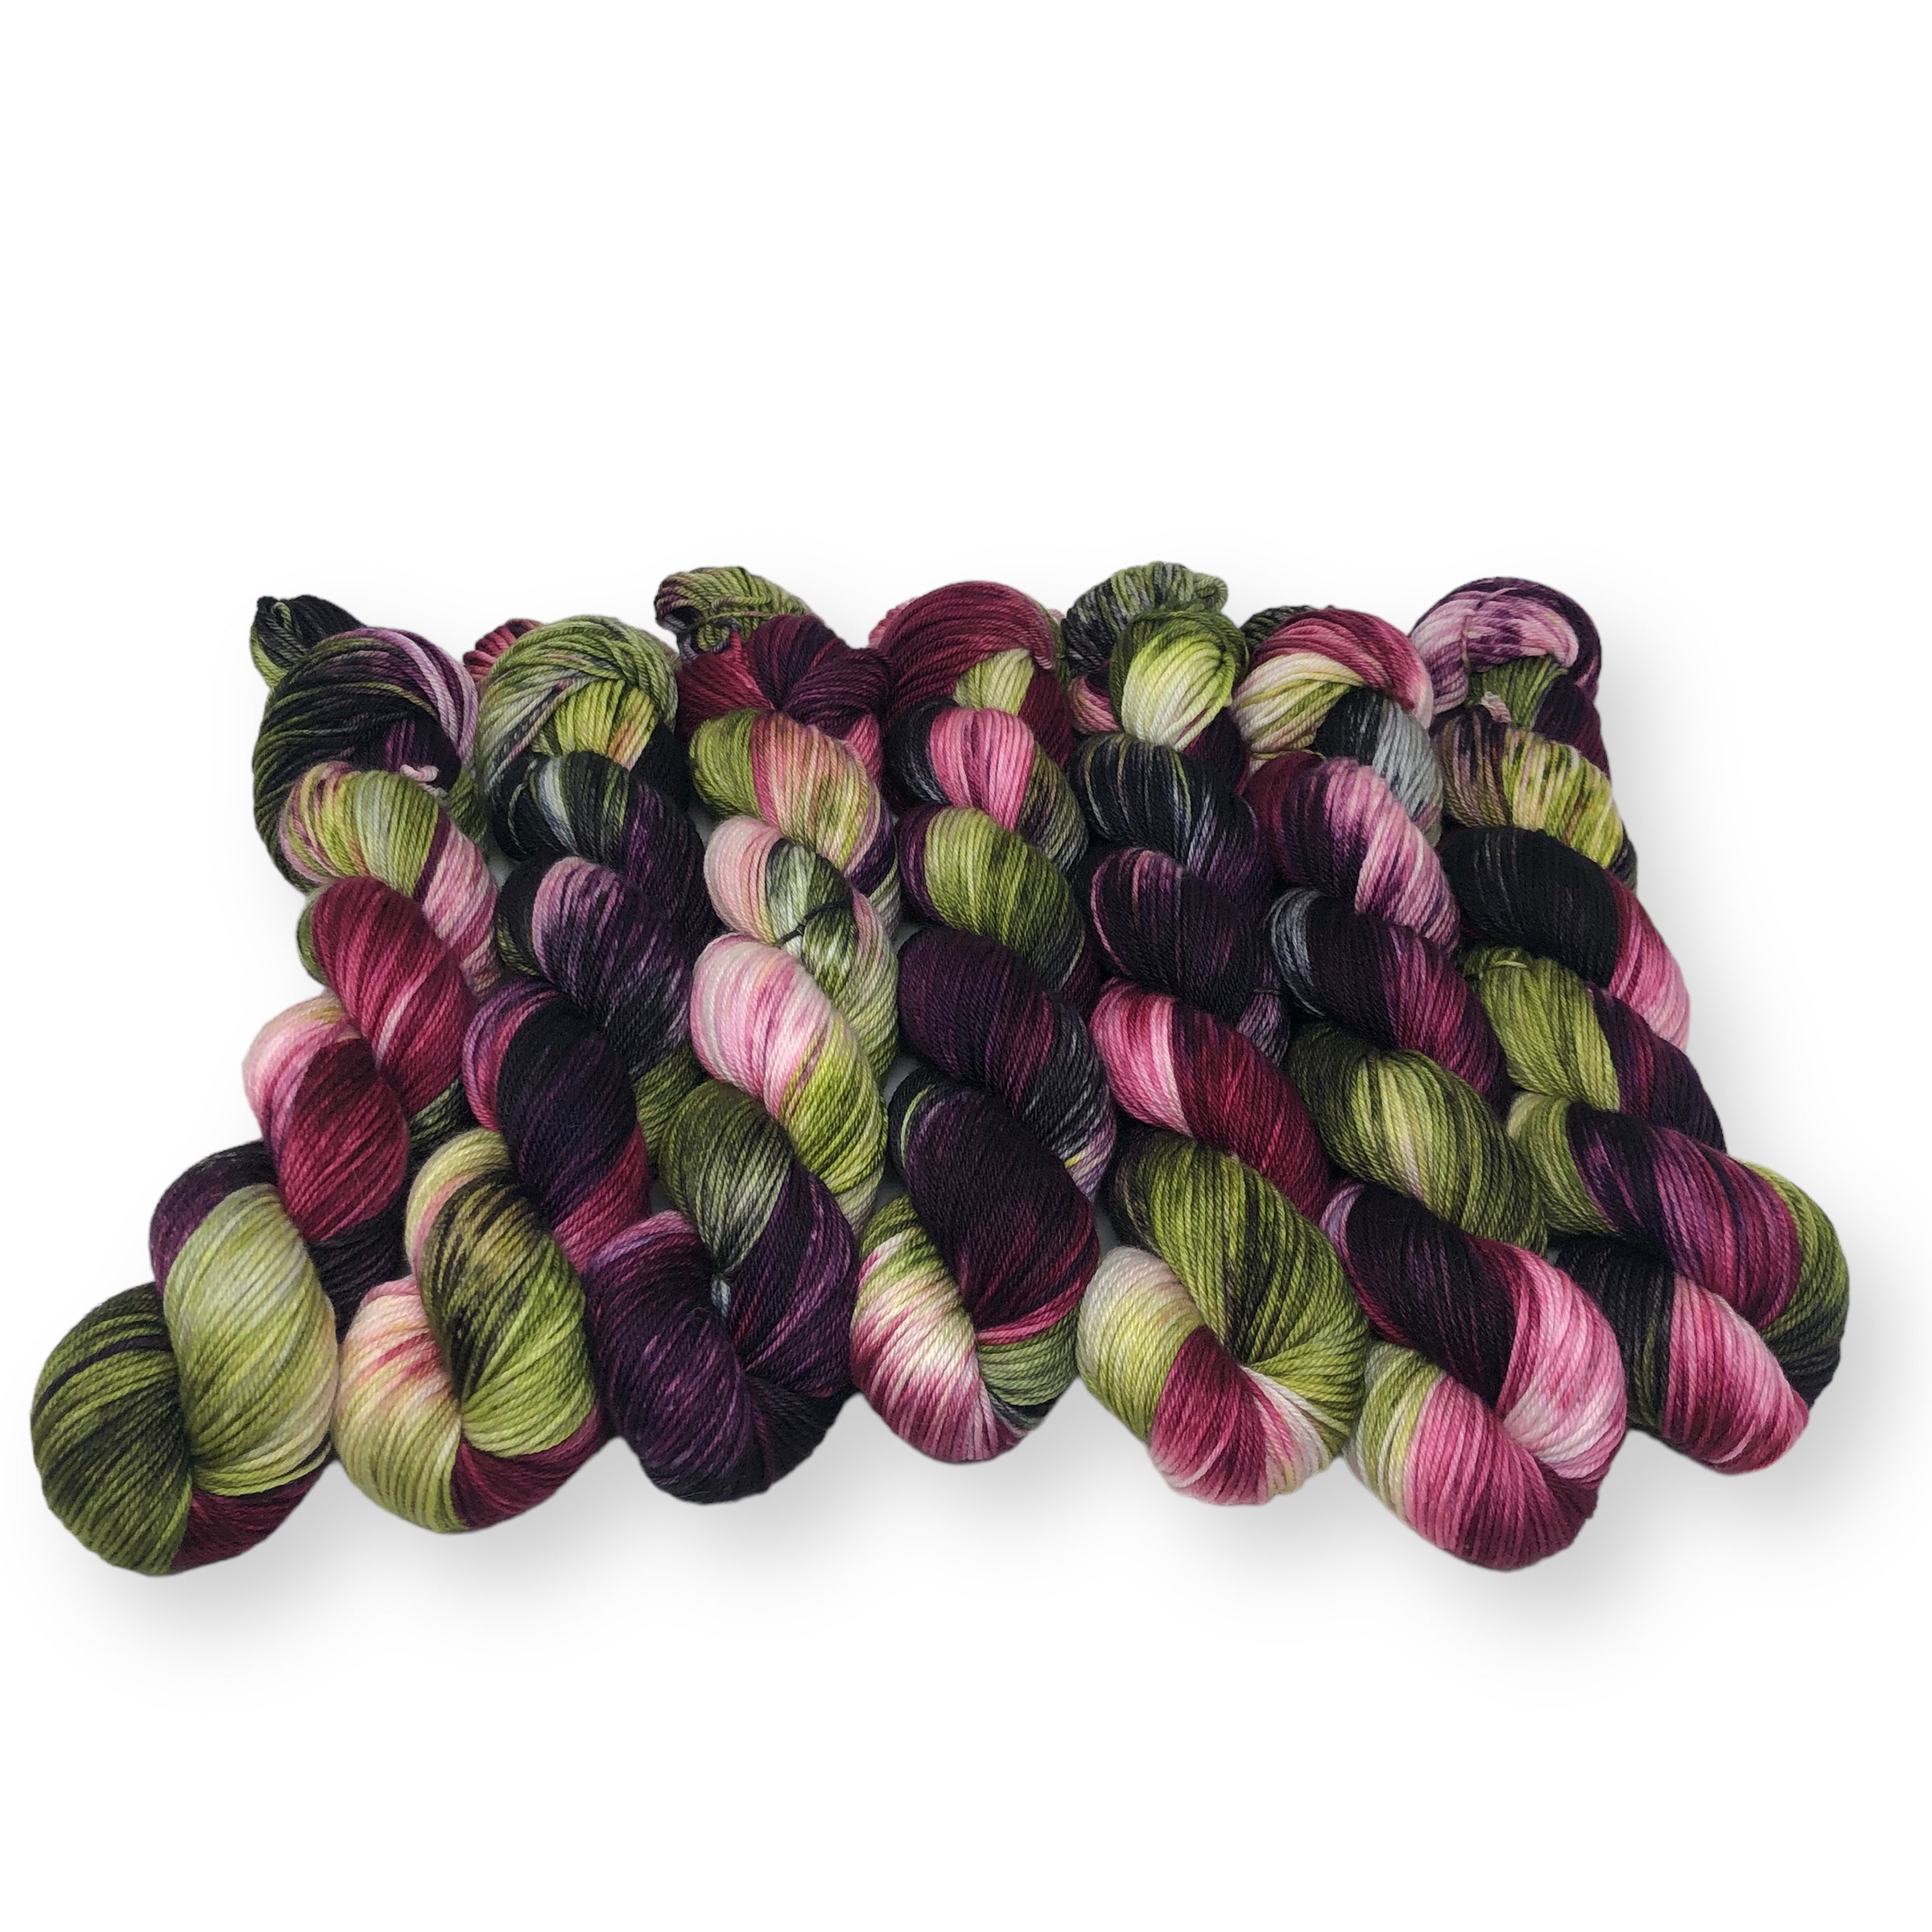 Briar Rose - Delightful DK - the perfect sweater yarn